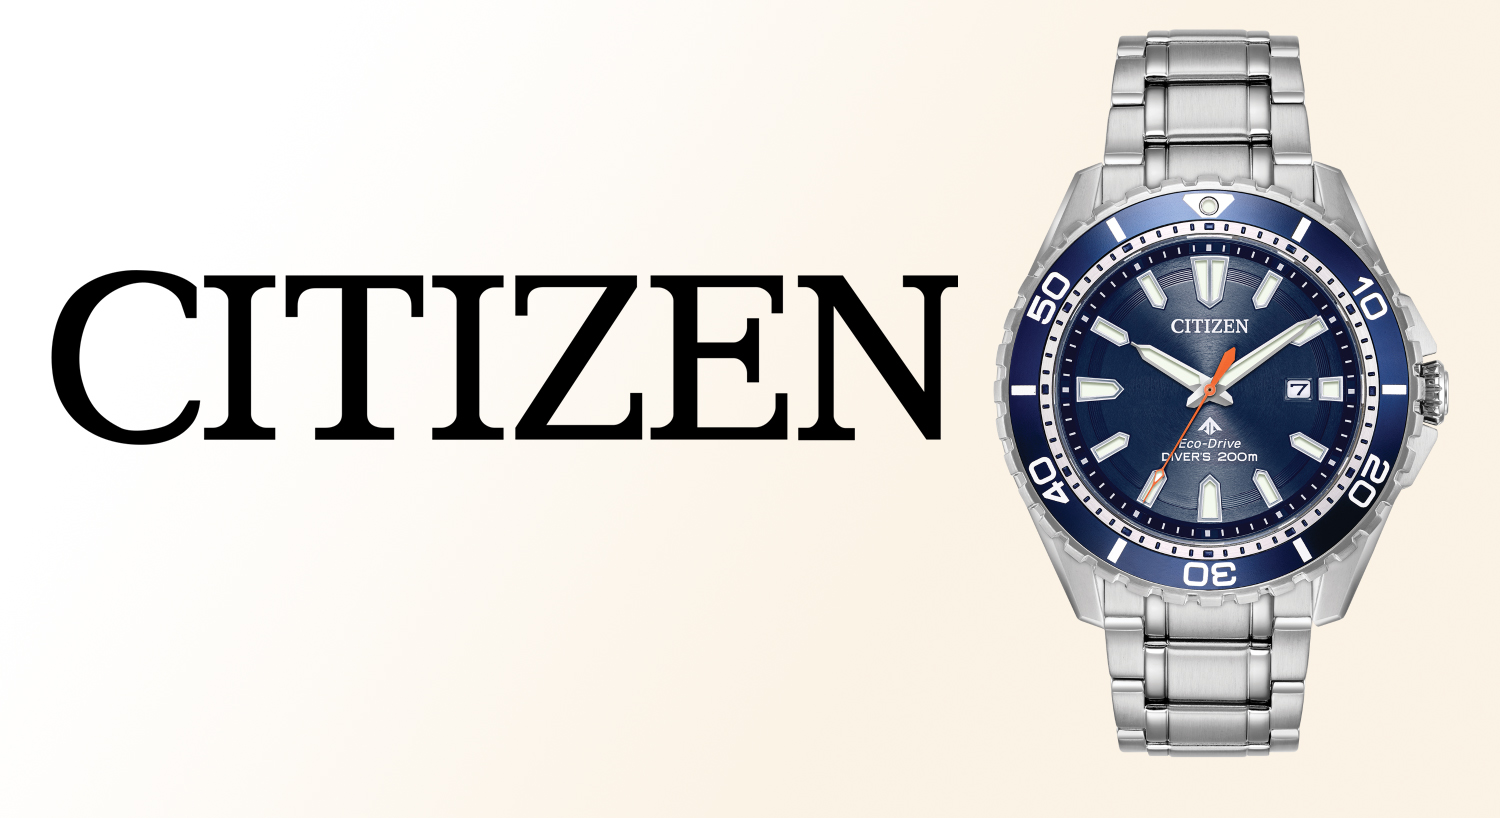 Citizen watch repair | Citizen clock repair shop, service in Boston